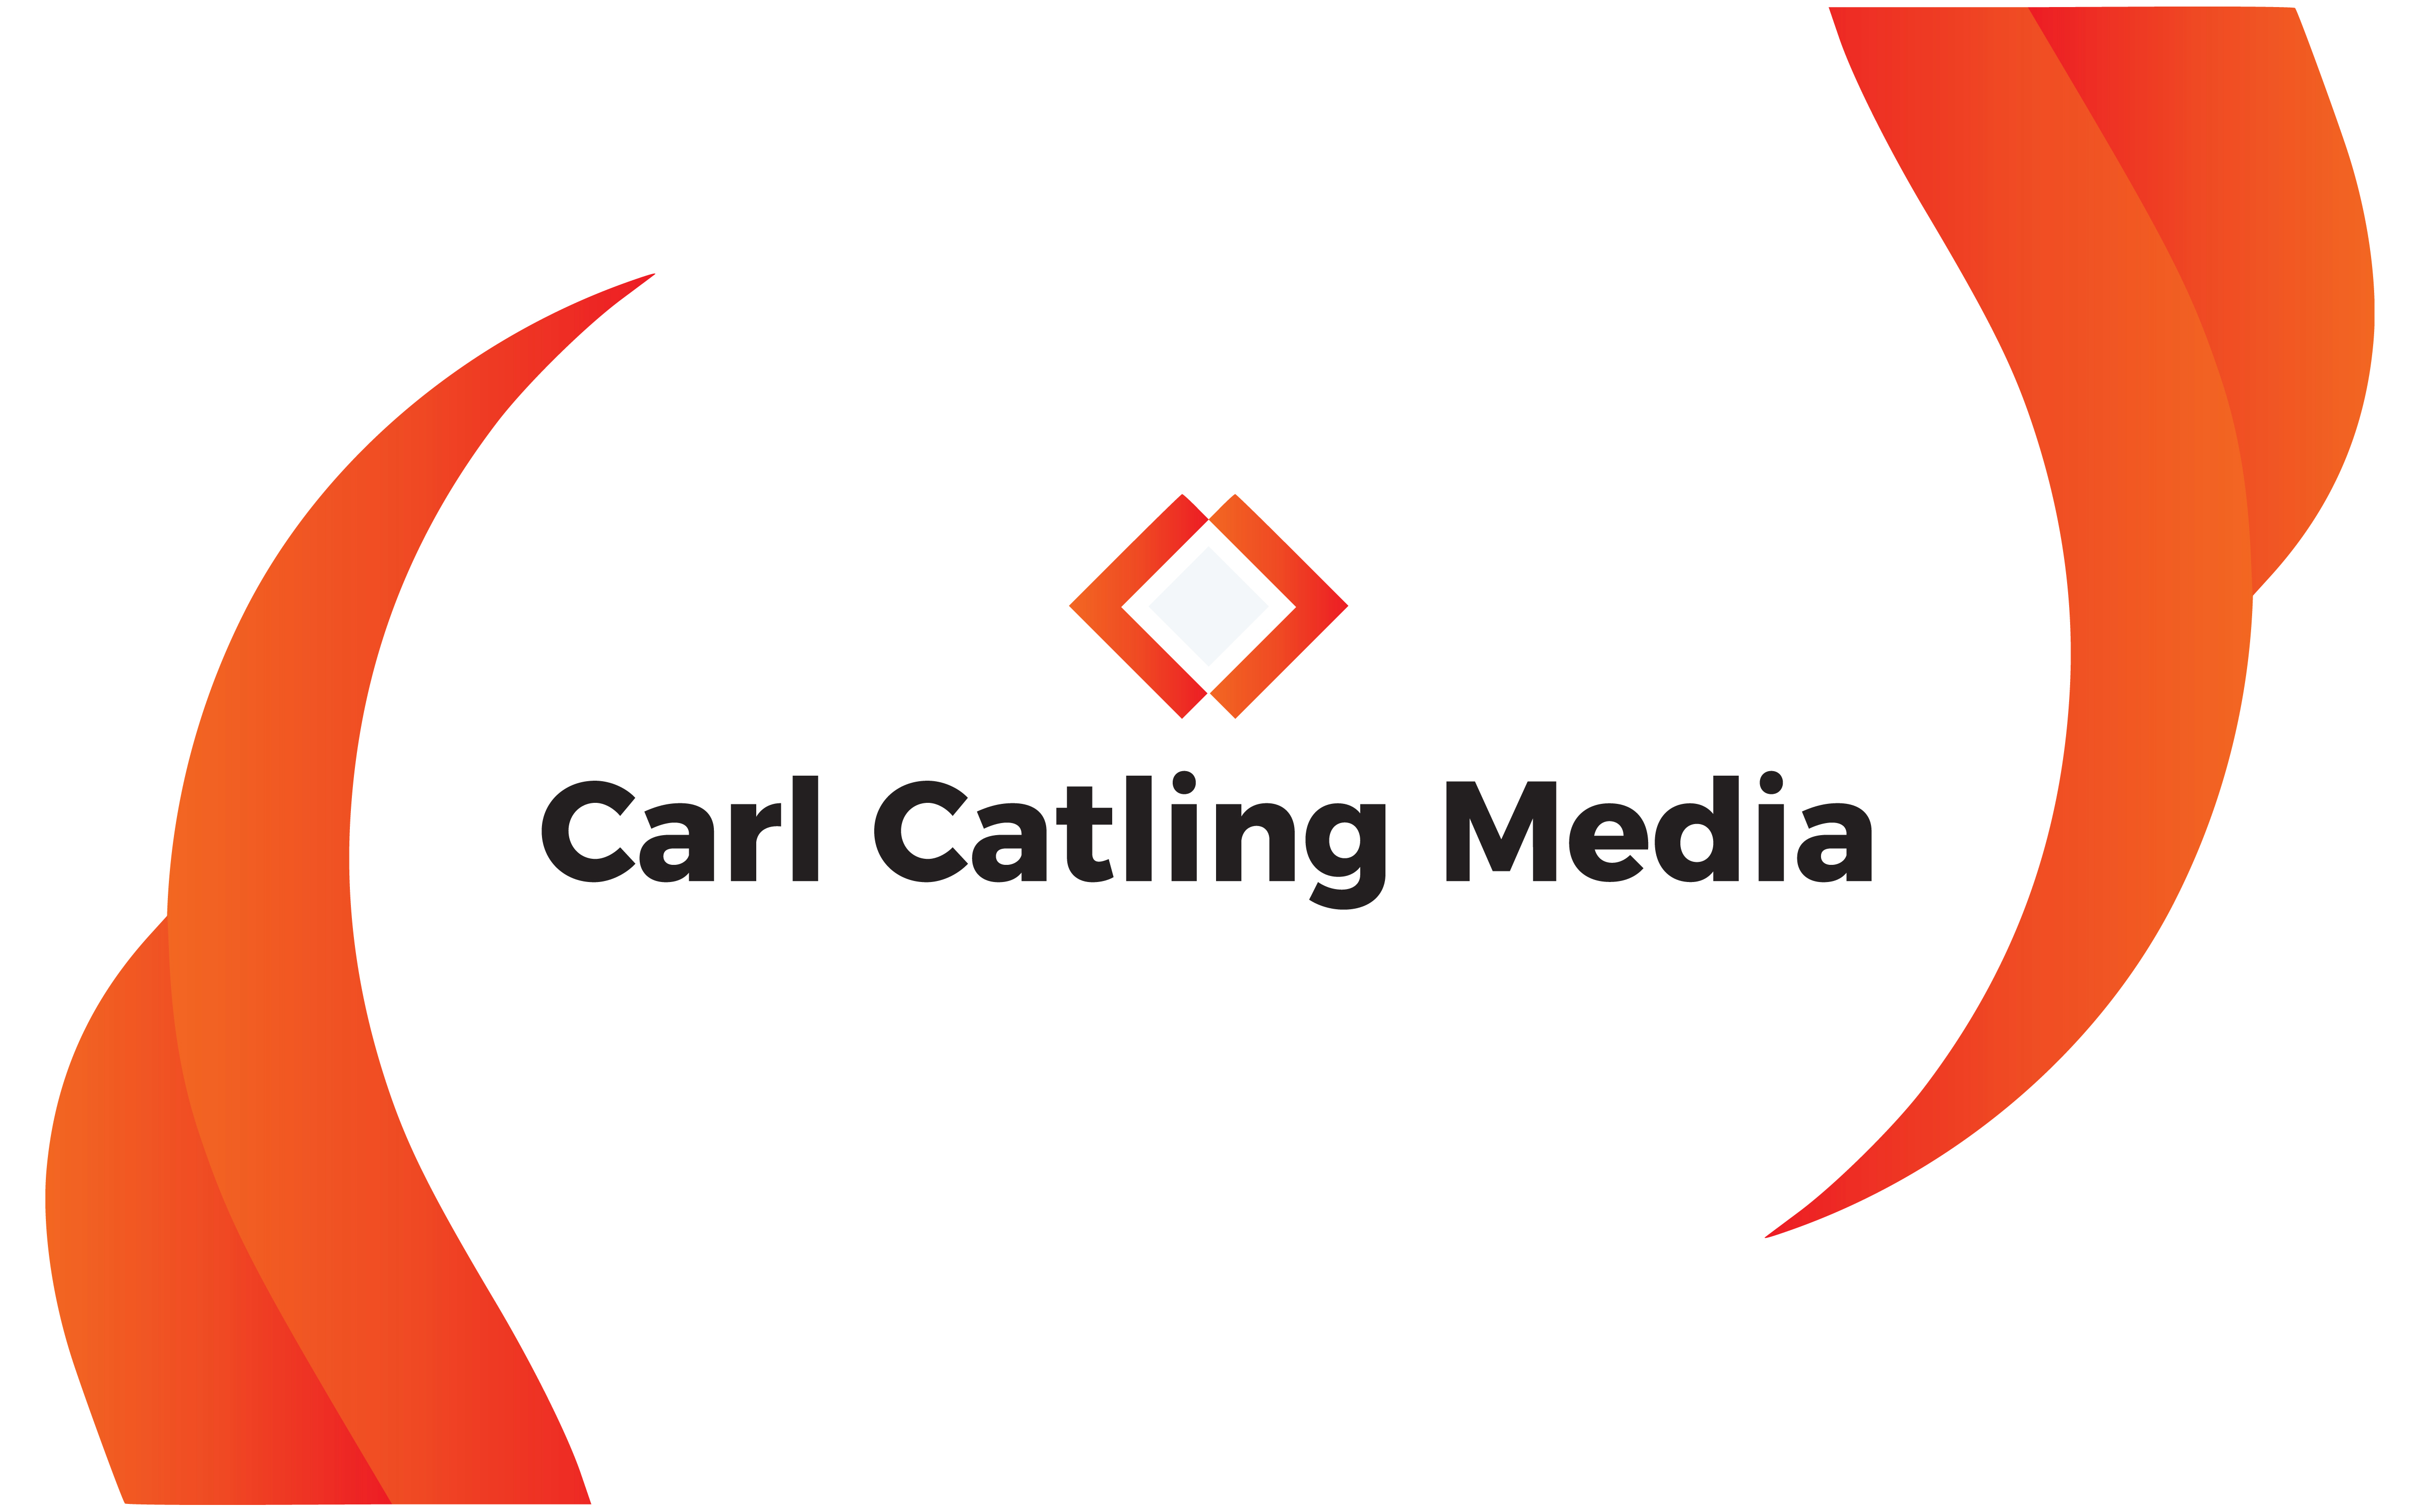 Carl Catling Media